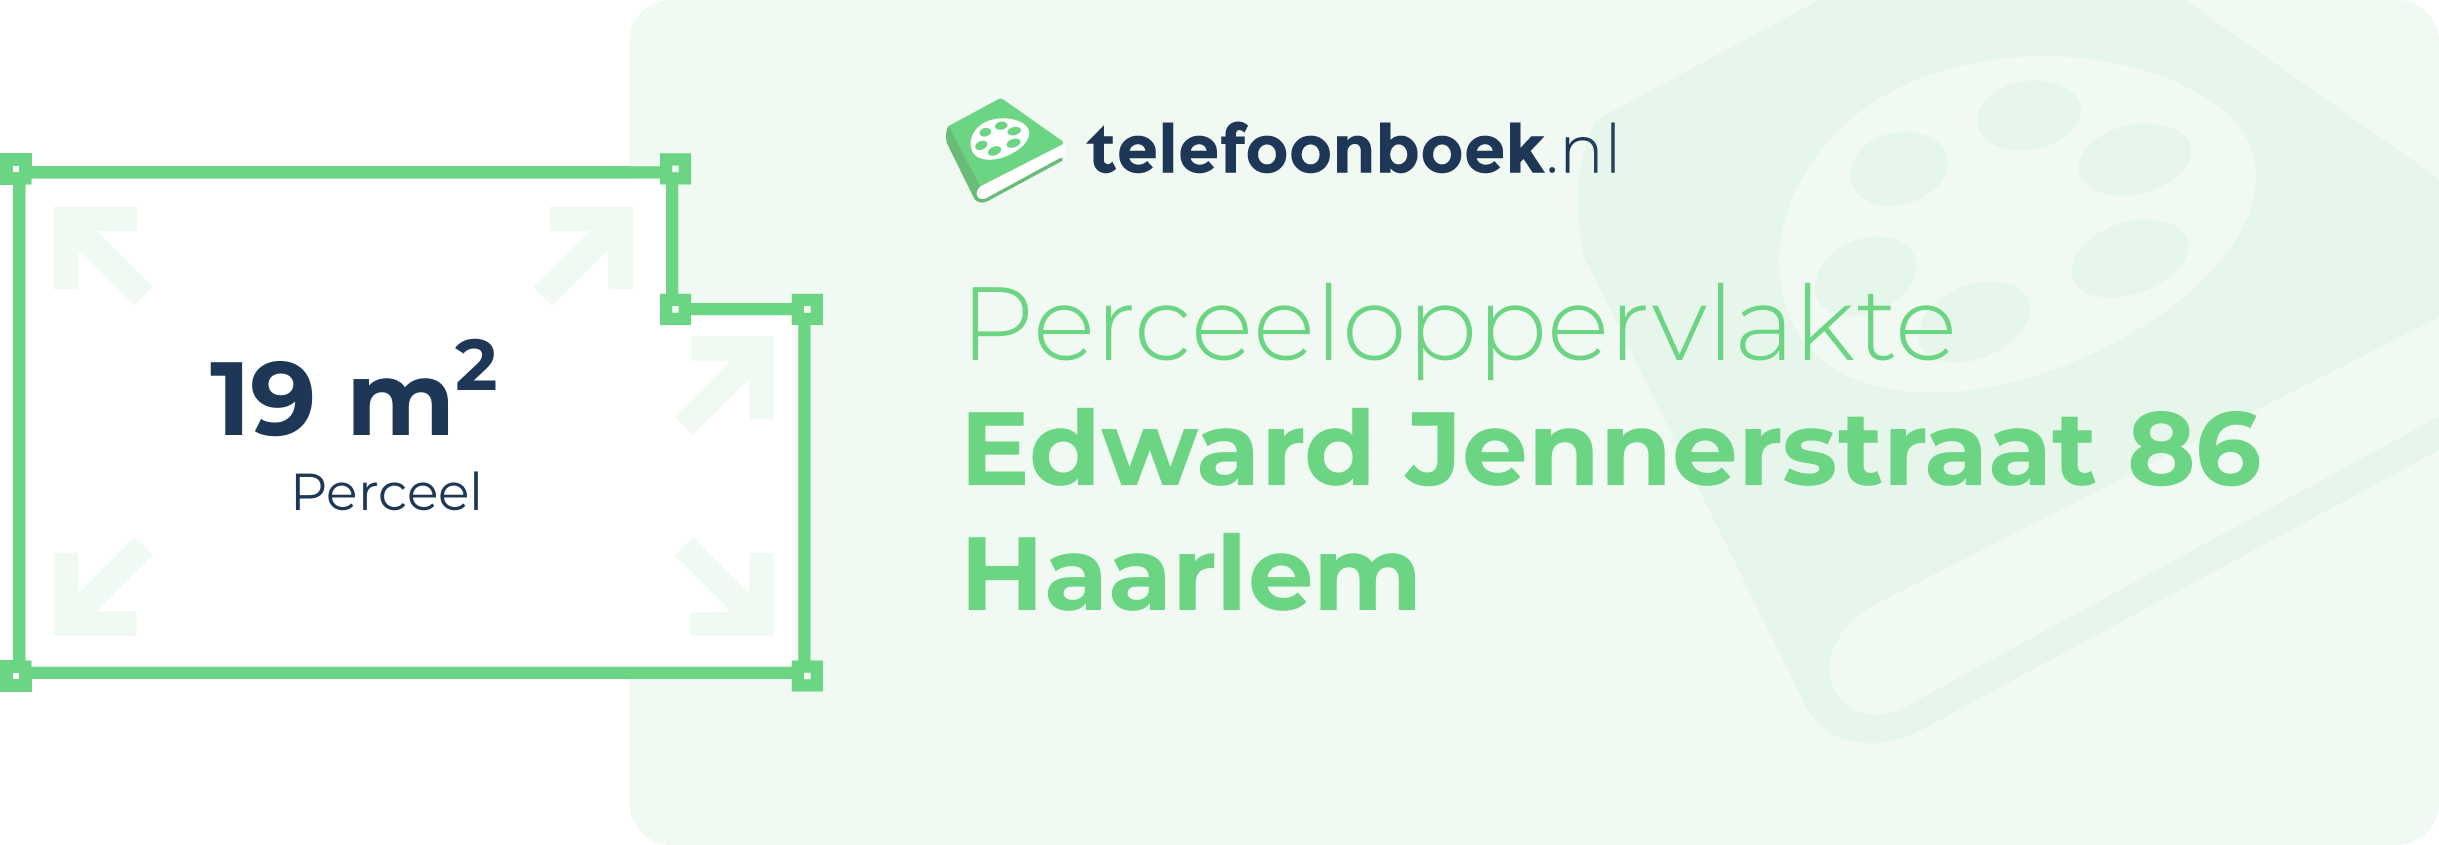 Perceeloppervlakte Edward Jennerstraat 86 Haarlem